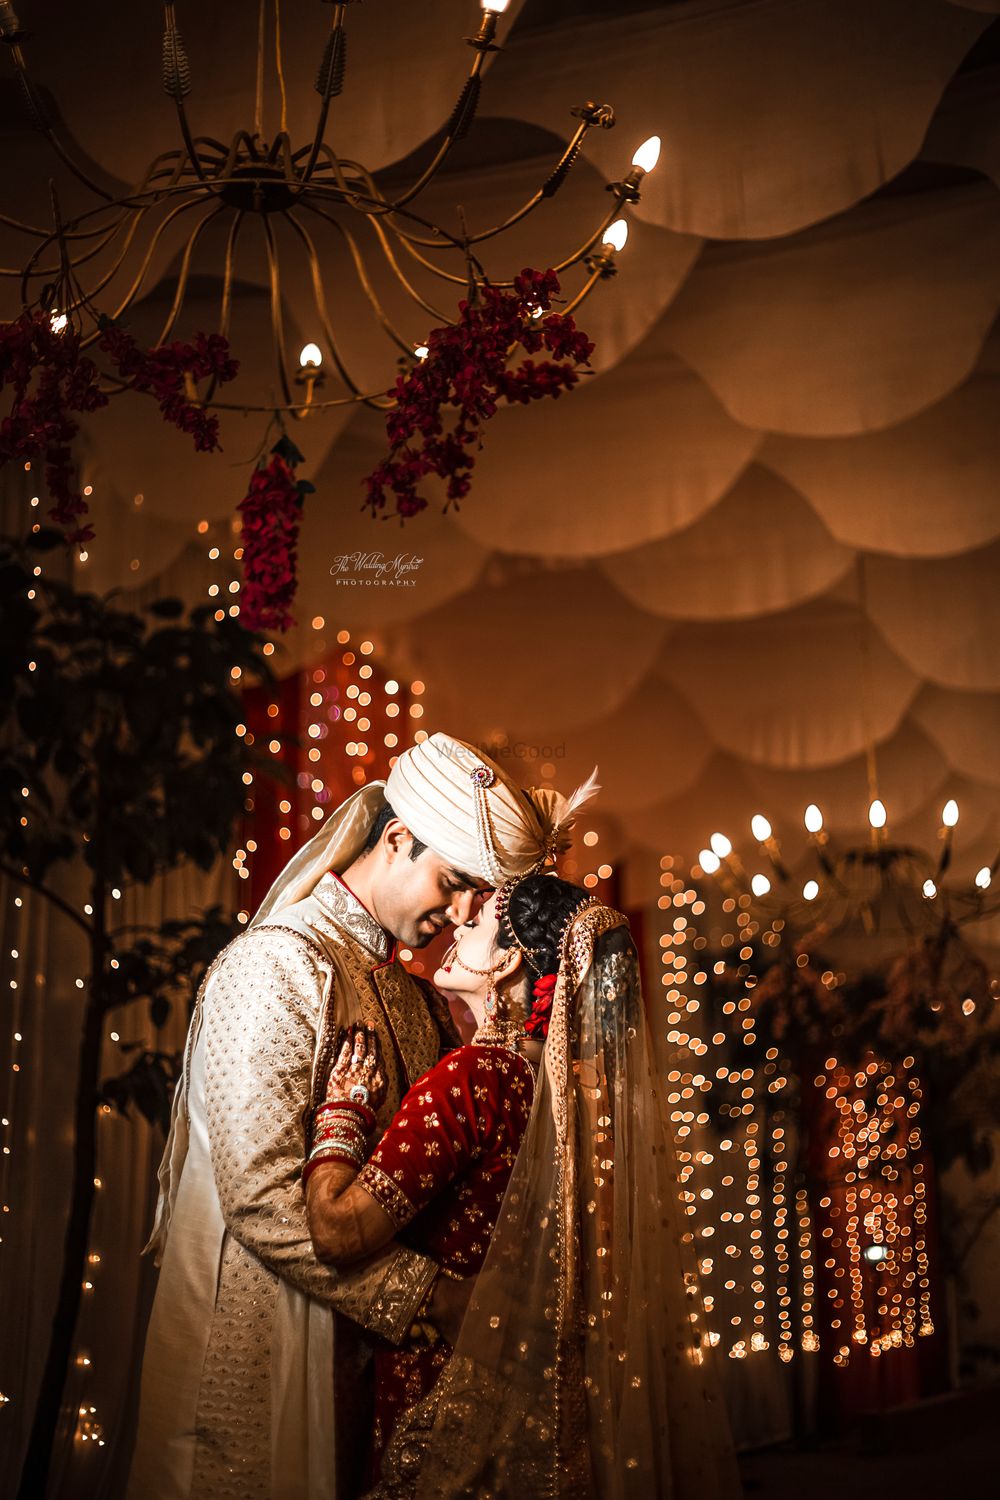 Photo By The Wedding Myntra - Photographers